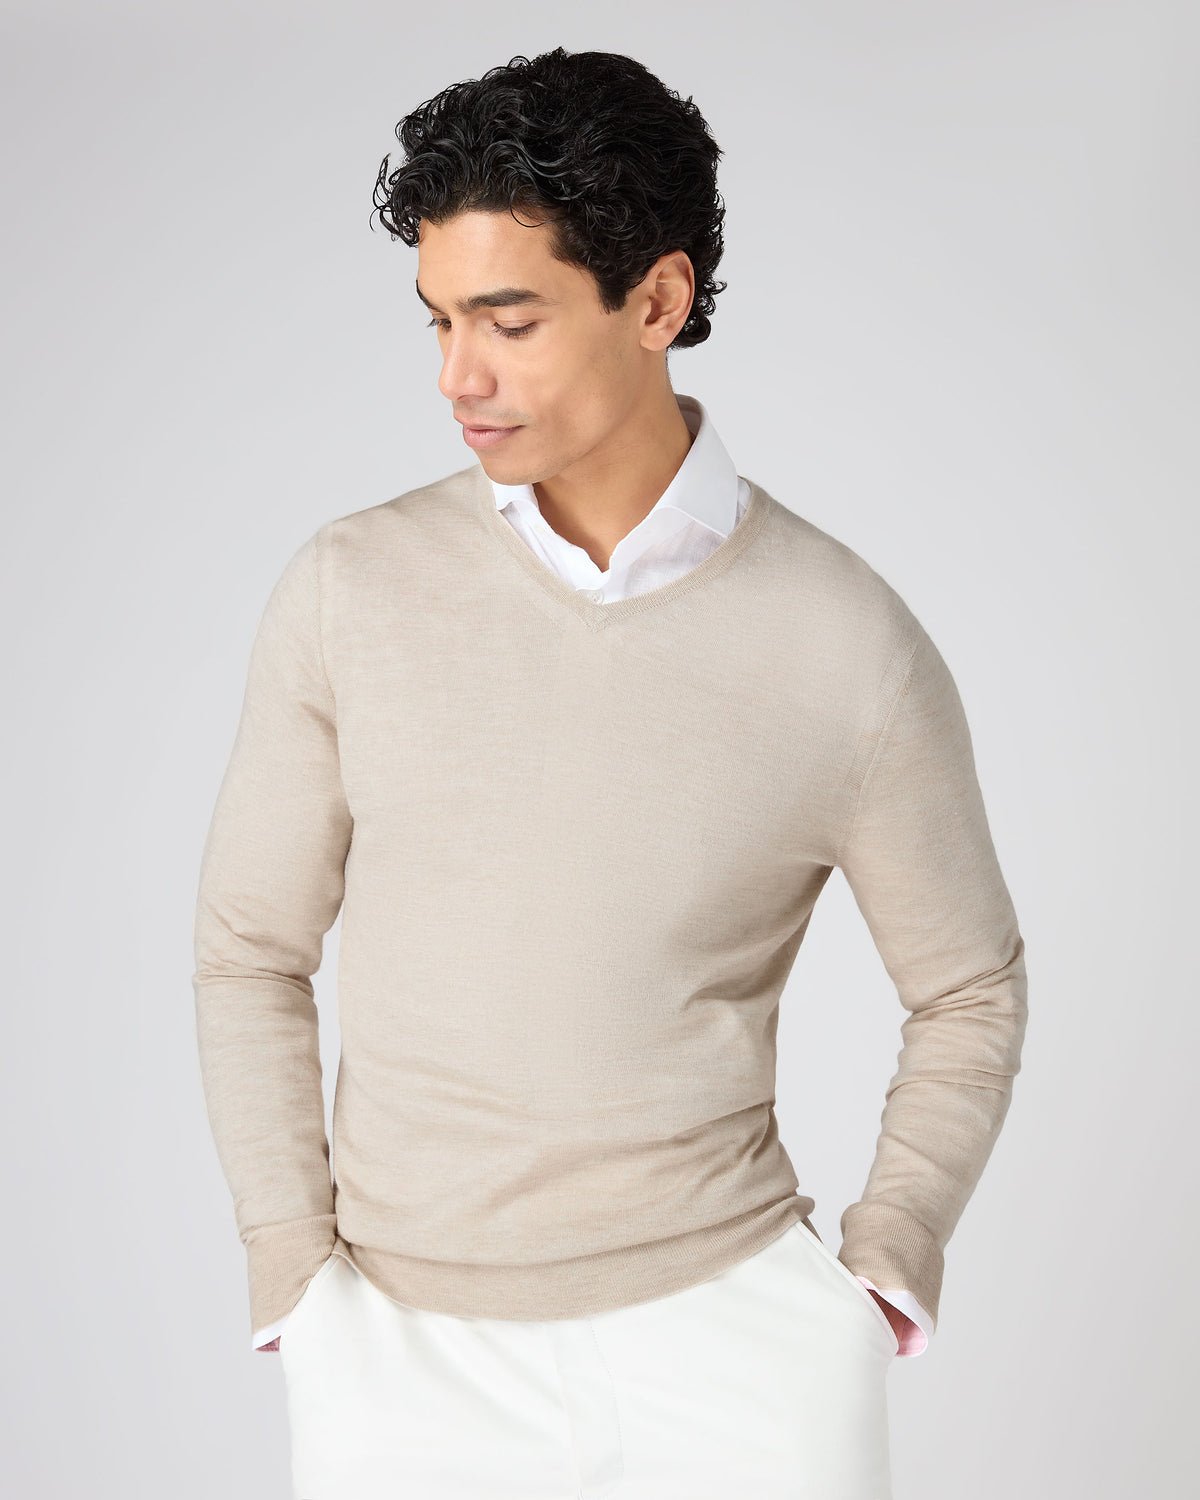 The V-neck Sweater